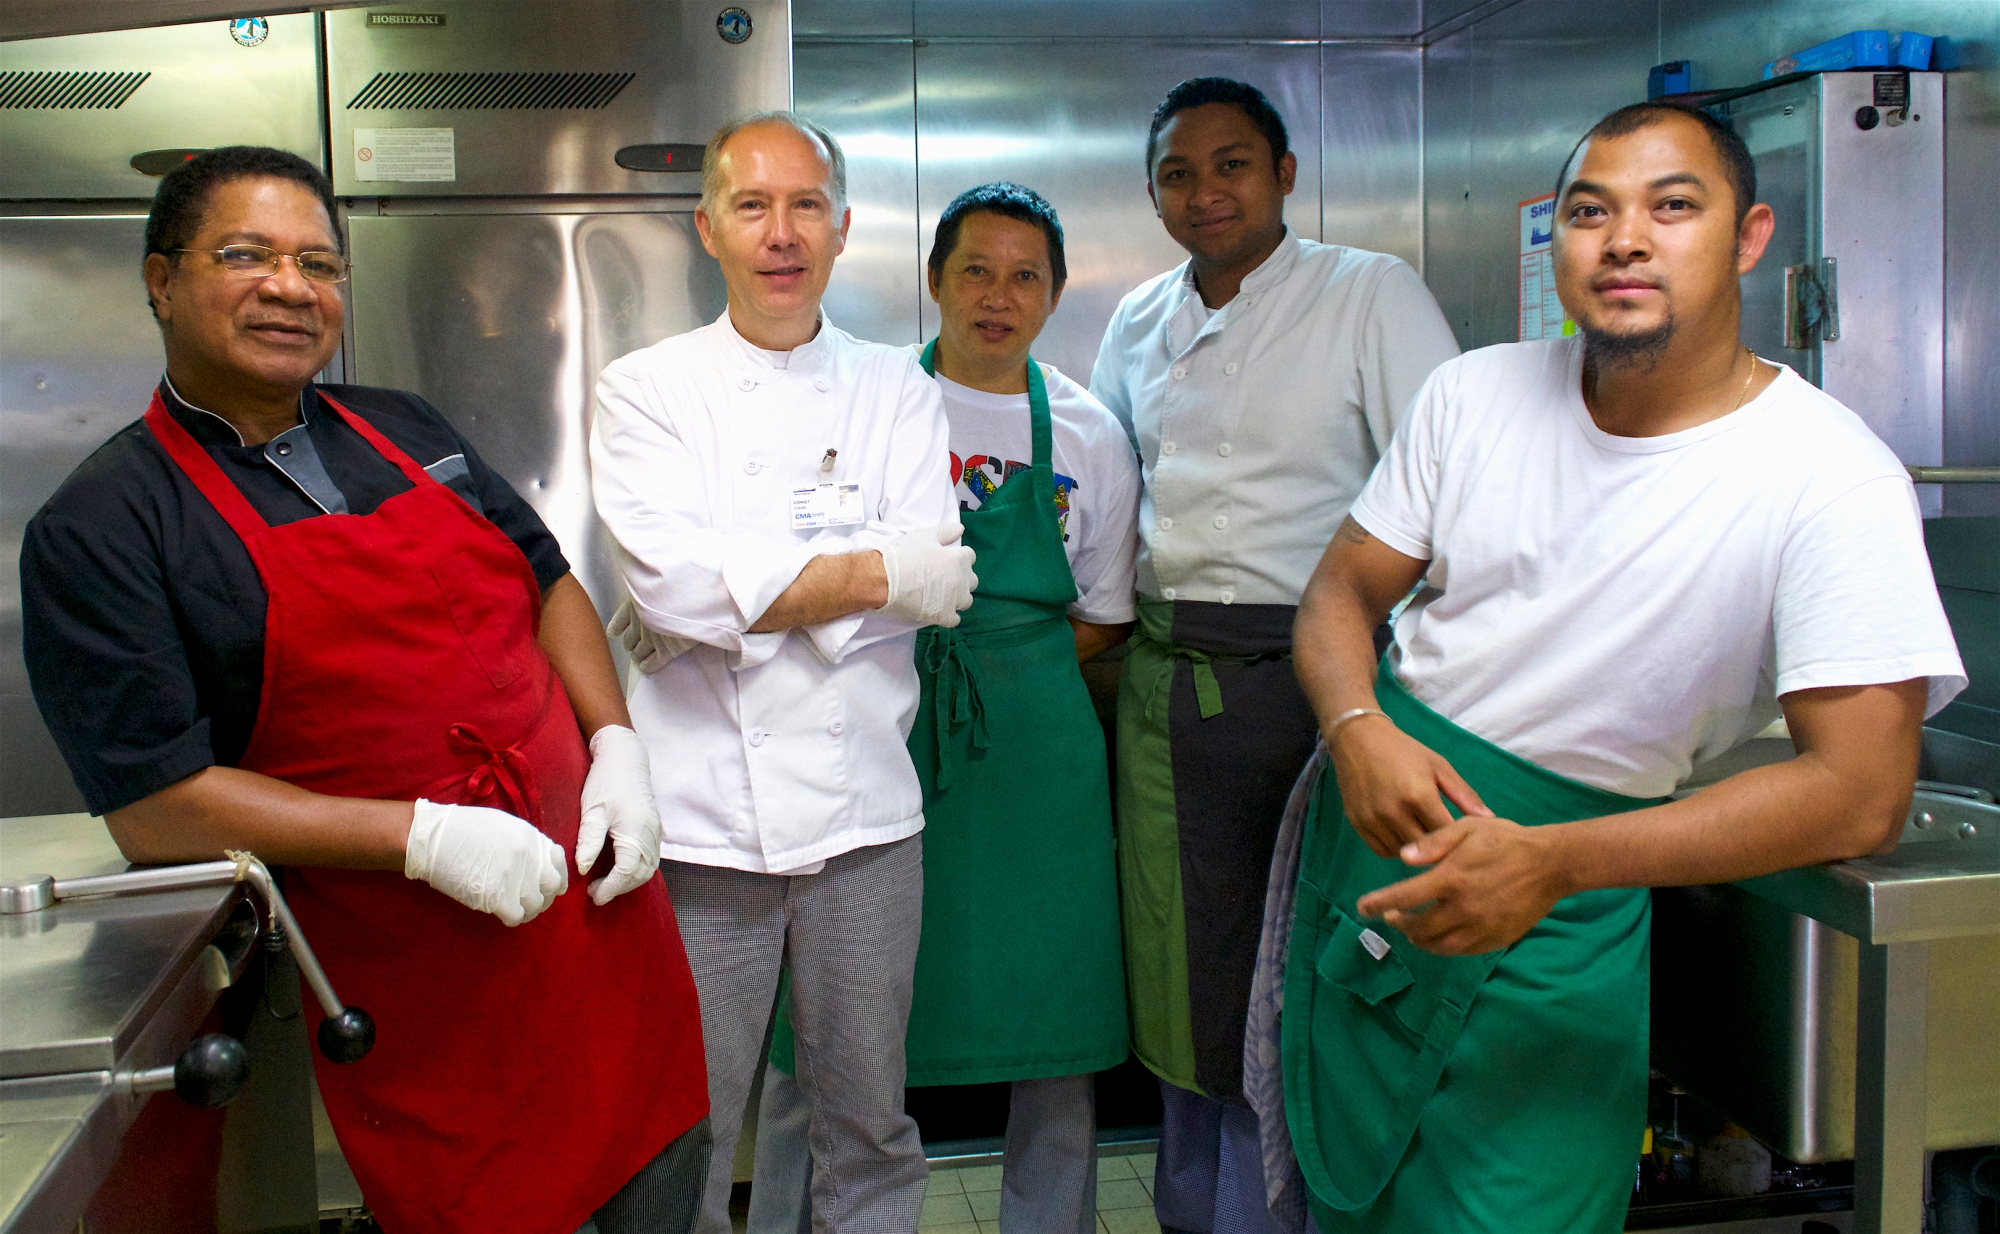 Chef Cornet’s crew calls itself The Jackson Five. (From left: Mr Olivier Rakotoniaina, Chef Claude Cornet, Mr Emillen Chow, Mr Jerry Andrianarijesy, and Mr Tantely Rakotobearson)